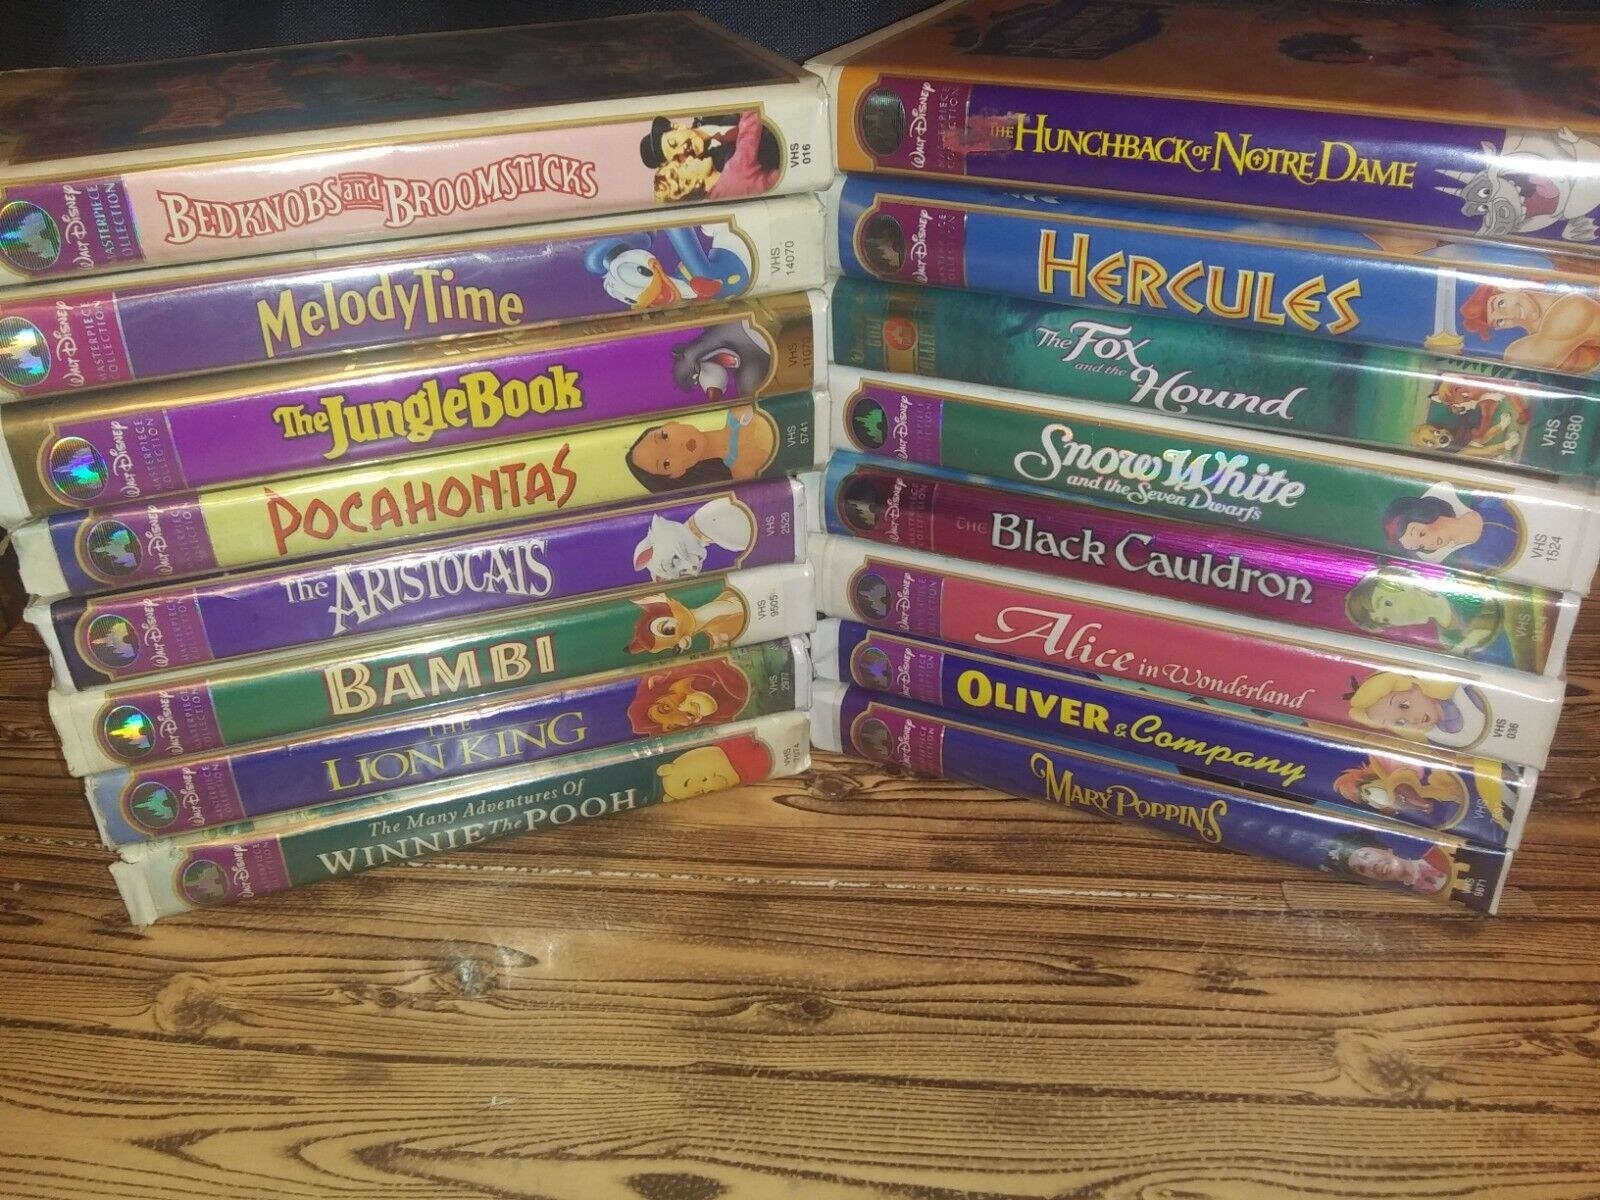 VHS Disney movies, like Pocahontas, The Lion King, and Bambi